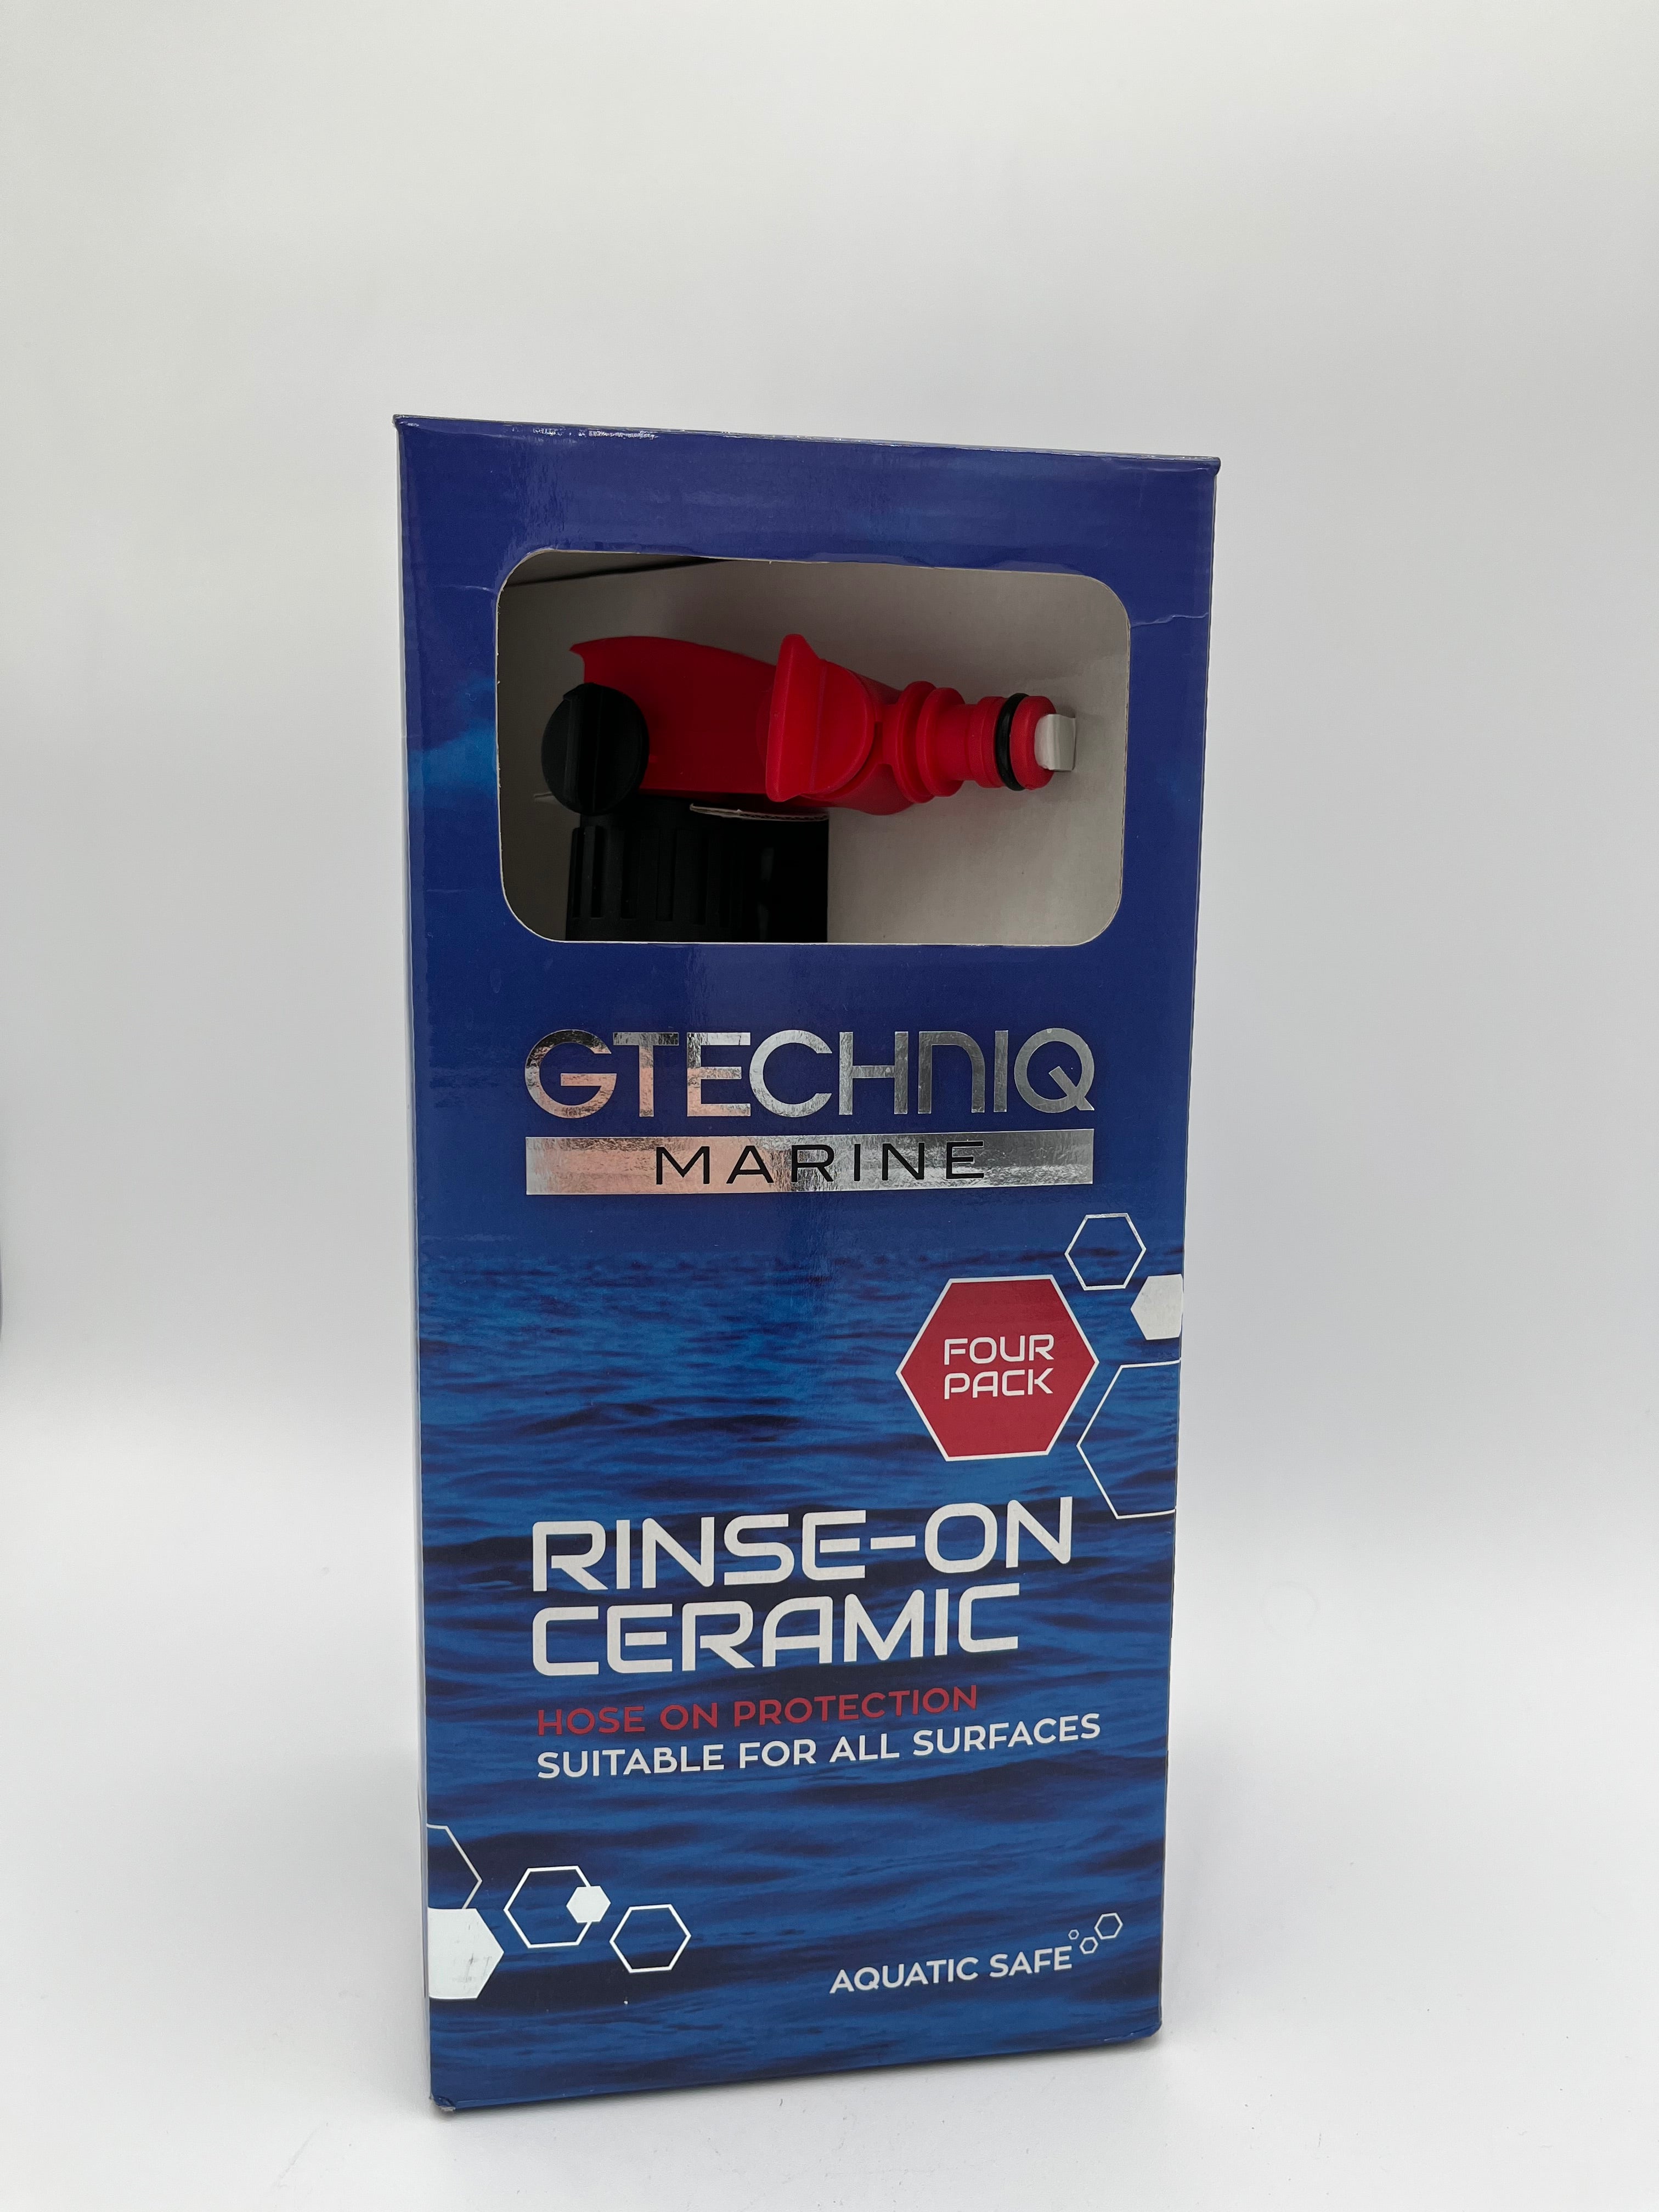 GTECHNIQ - Rinse-on Ceramic - 4 pk.